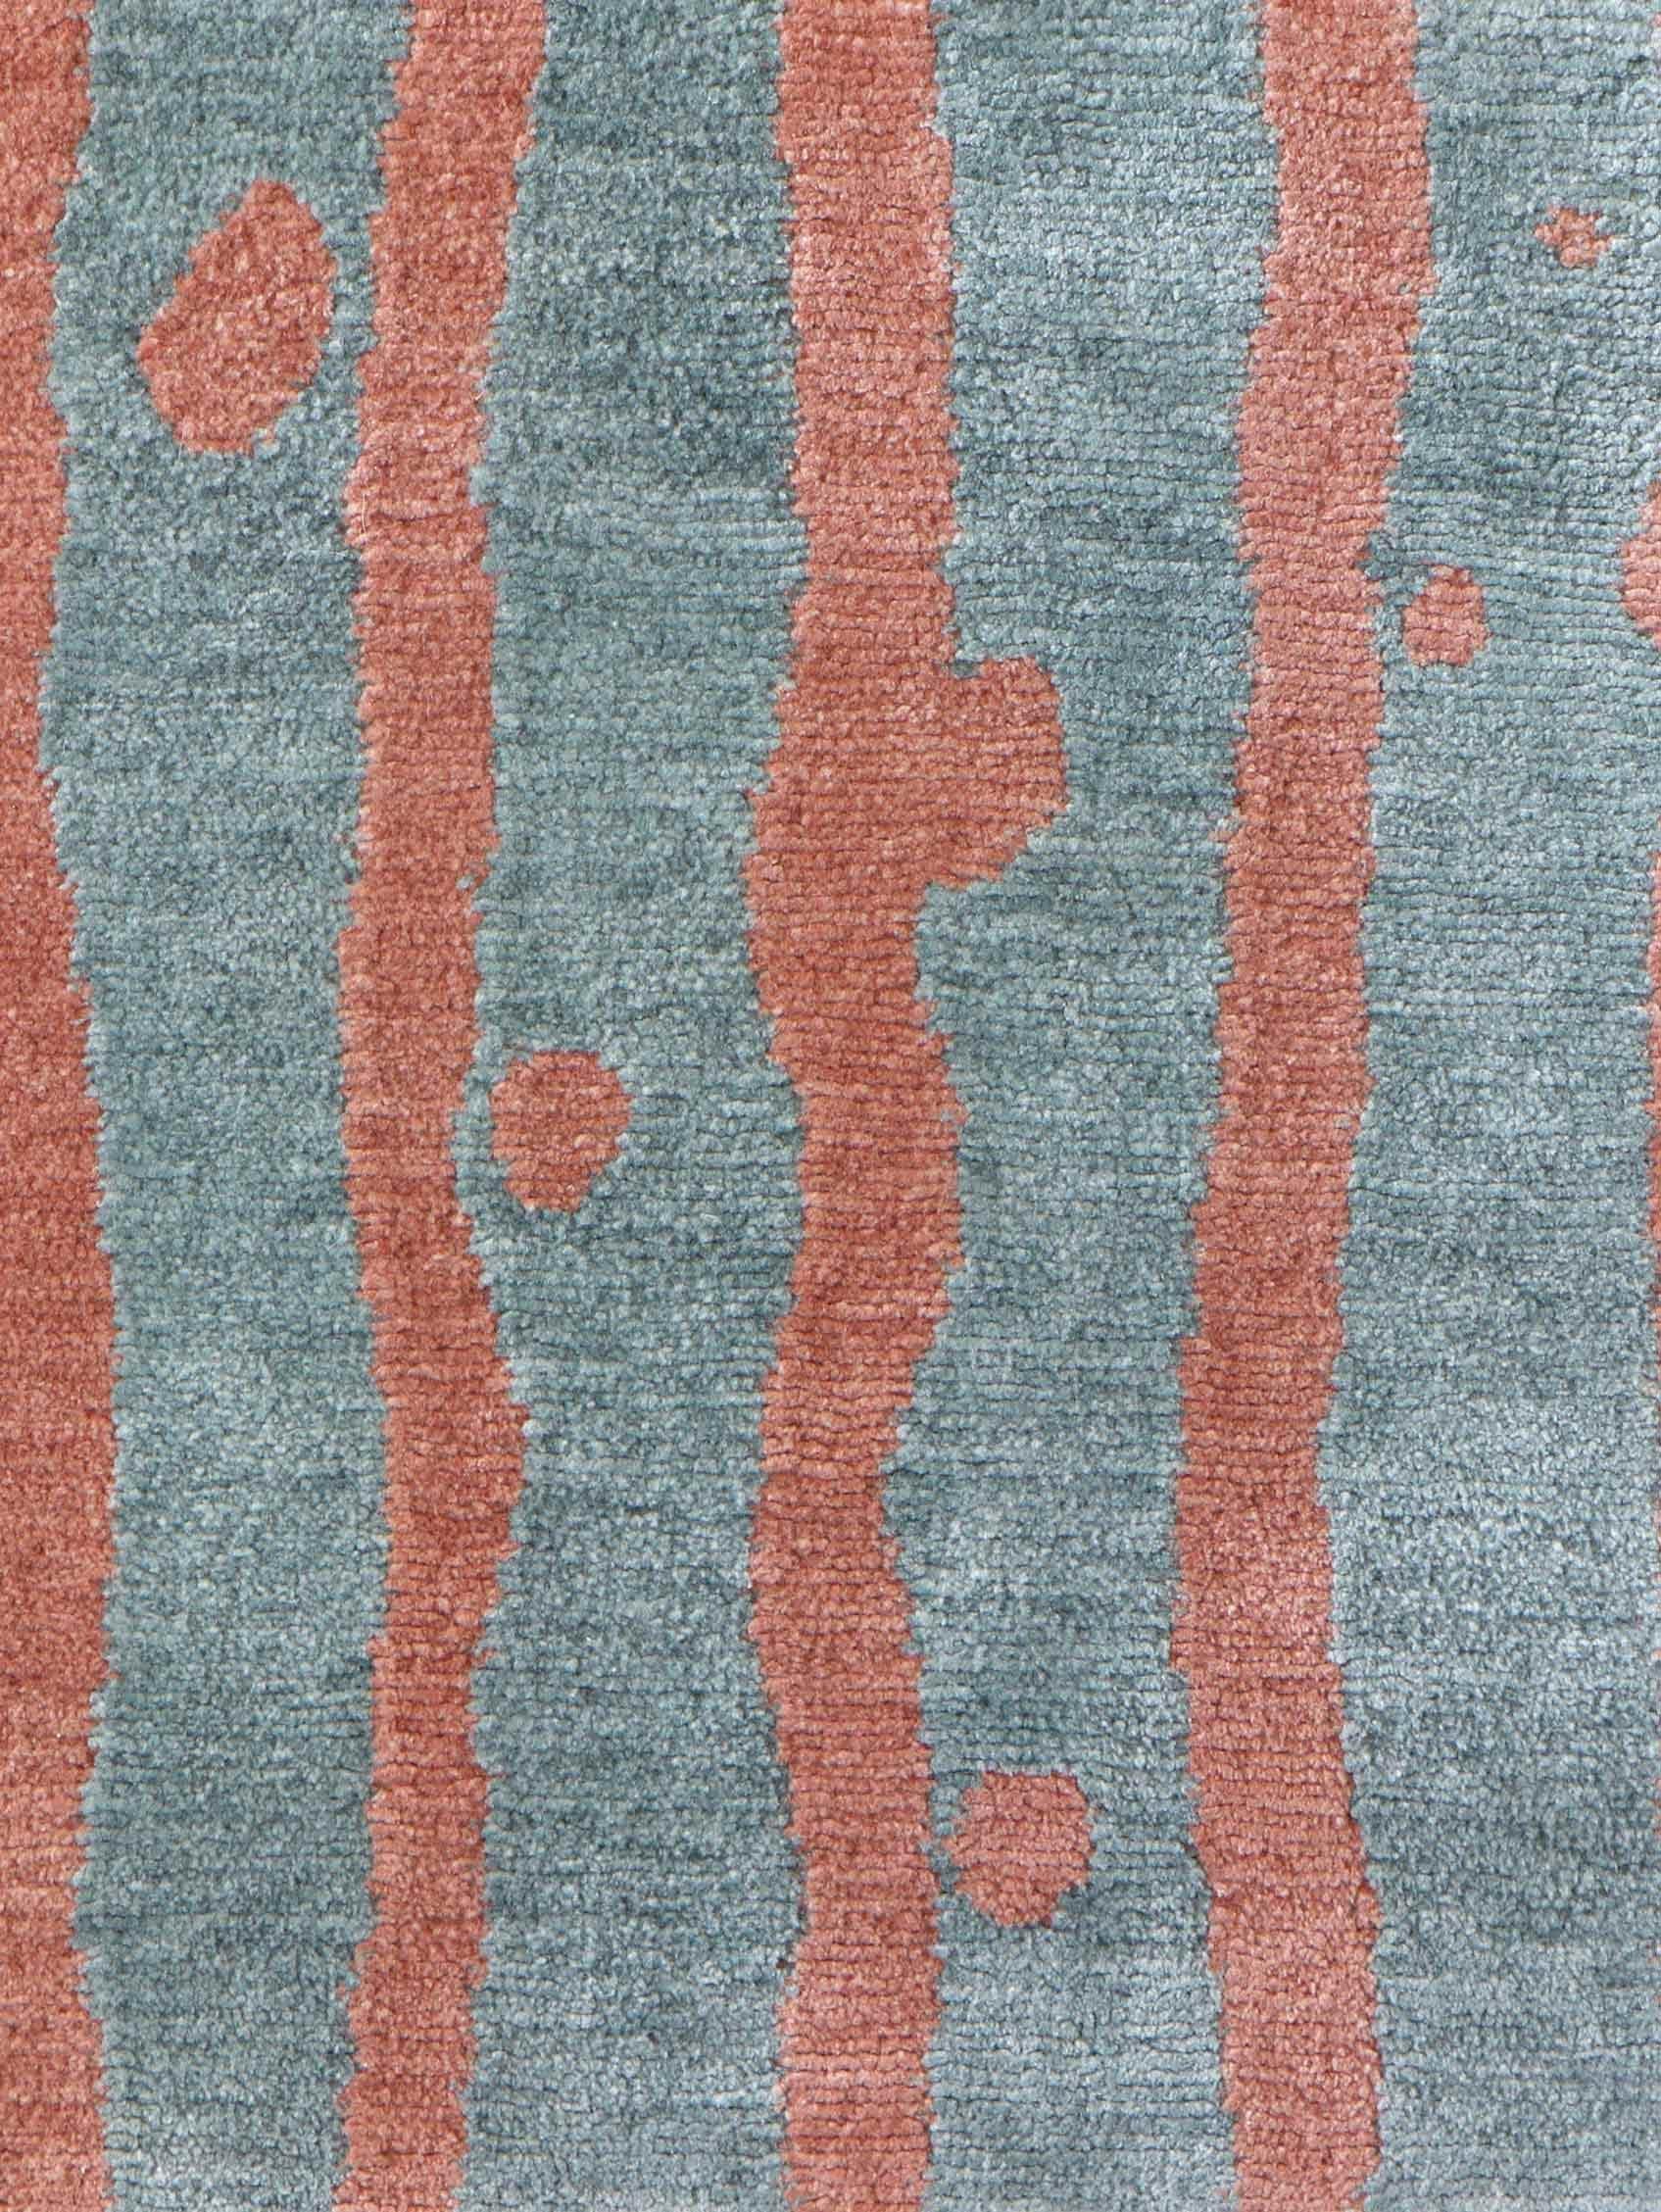 Rug pattern: Drippy Stripe - Morea
Material: 100% Merino Wool
Quality: Tibetan Cross Weave, handwoven 
Size: 8’-0